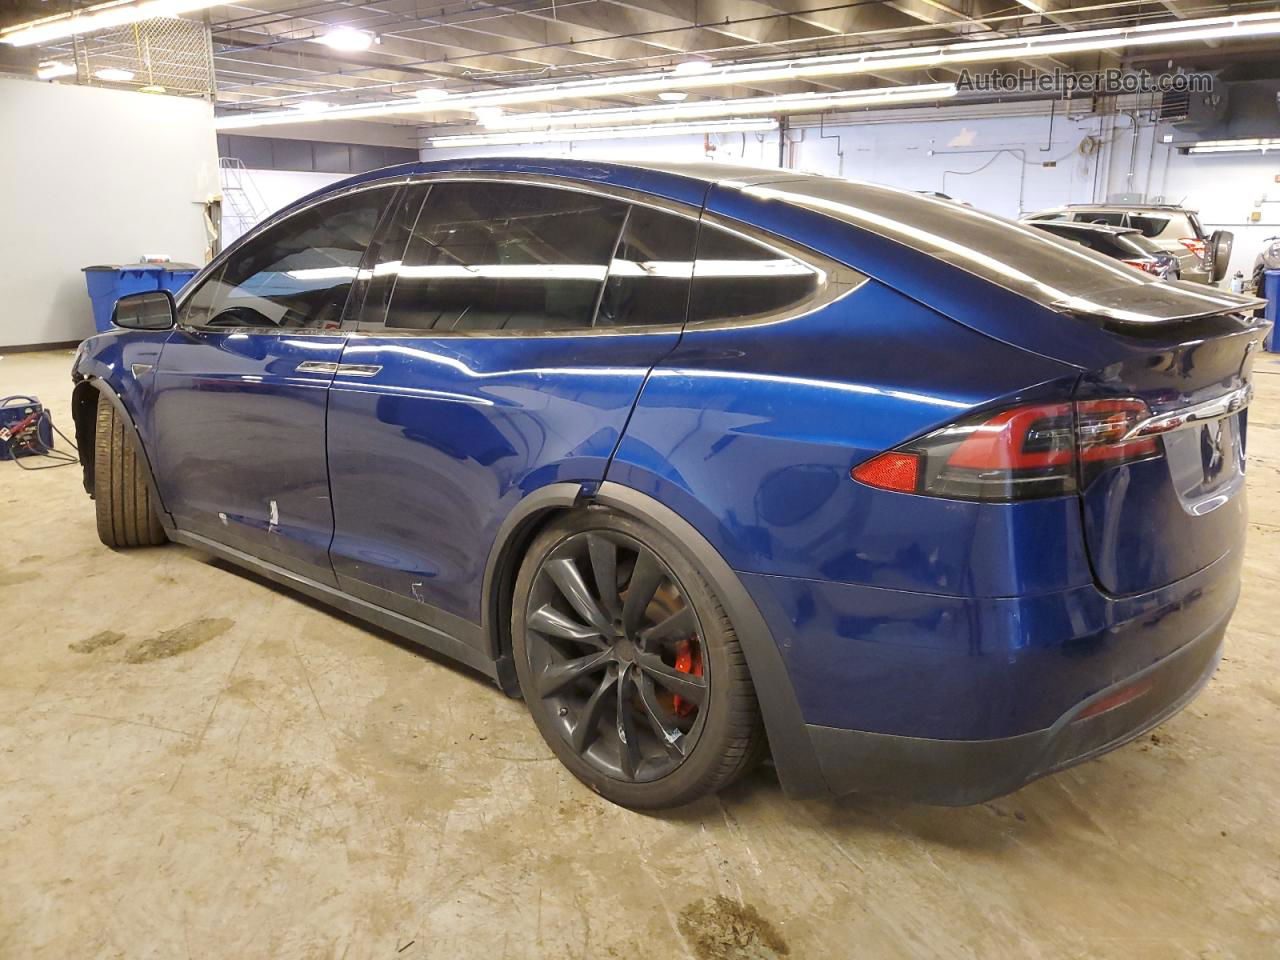 2016 Tesla Model X  Синий vin: 5YJXCBE45GF011357